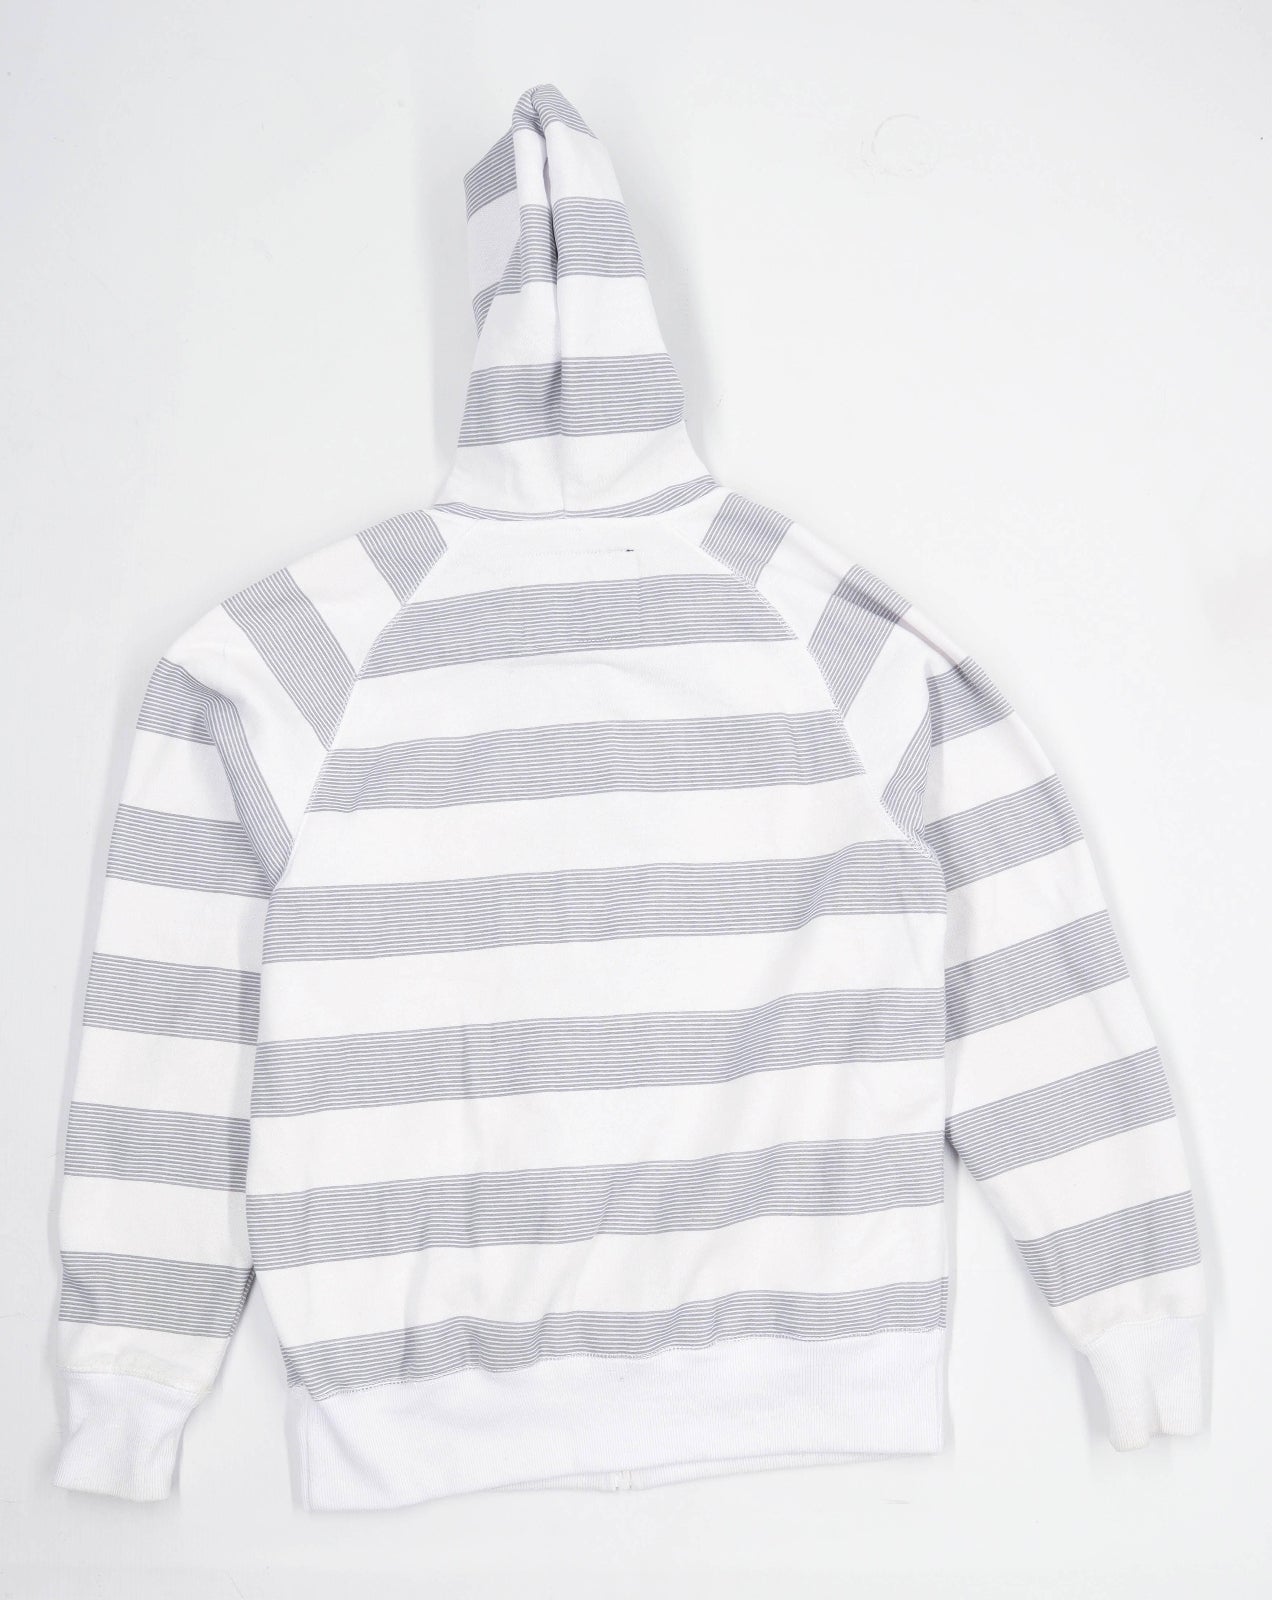 Urban Spirit Mens Size S Cotton Blend Striped White Hoodie